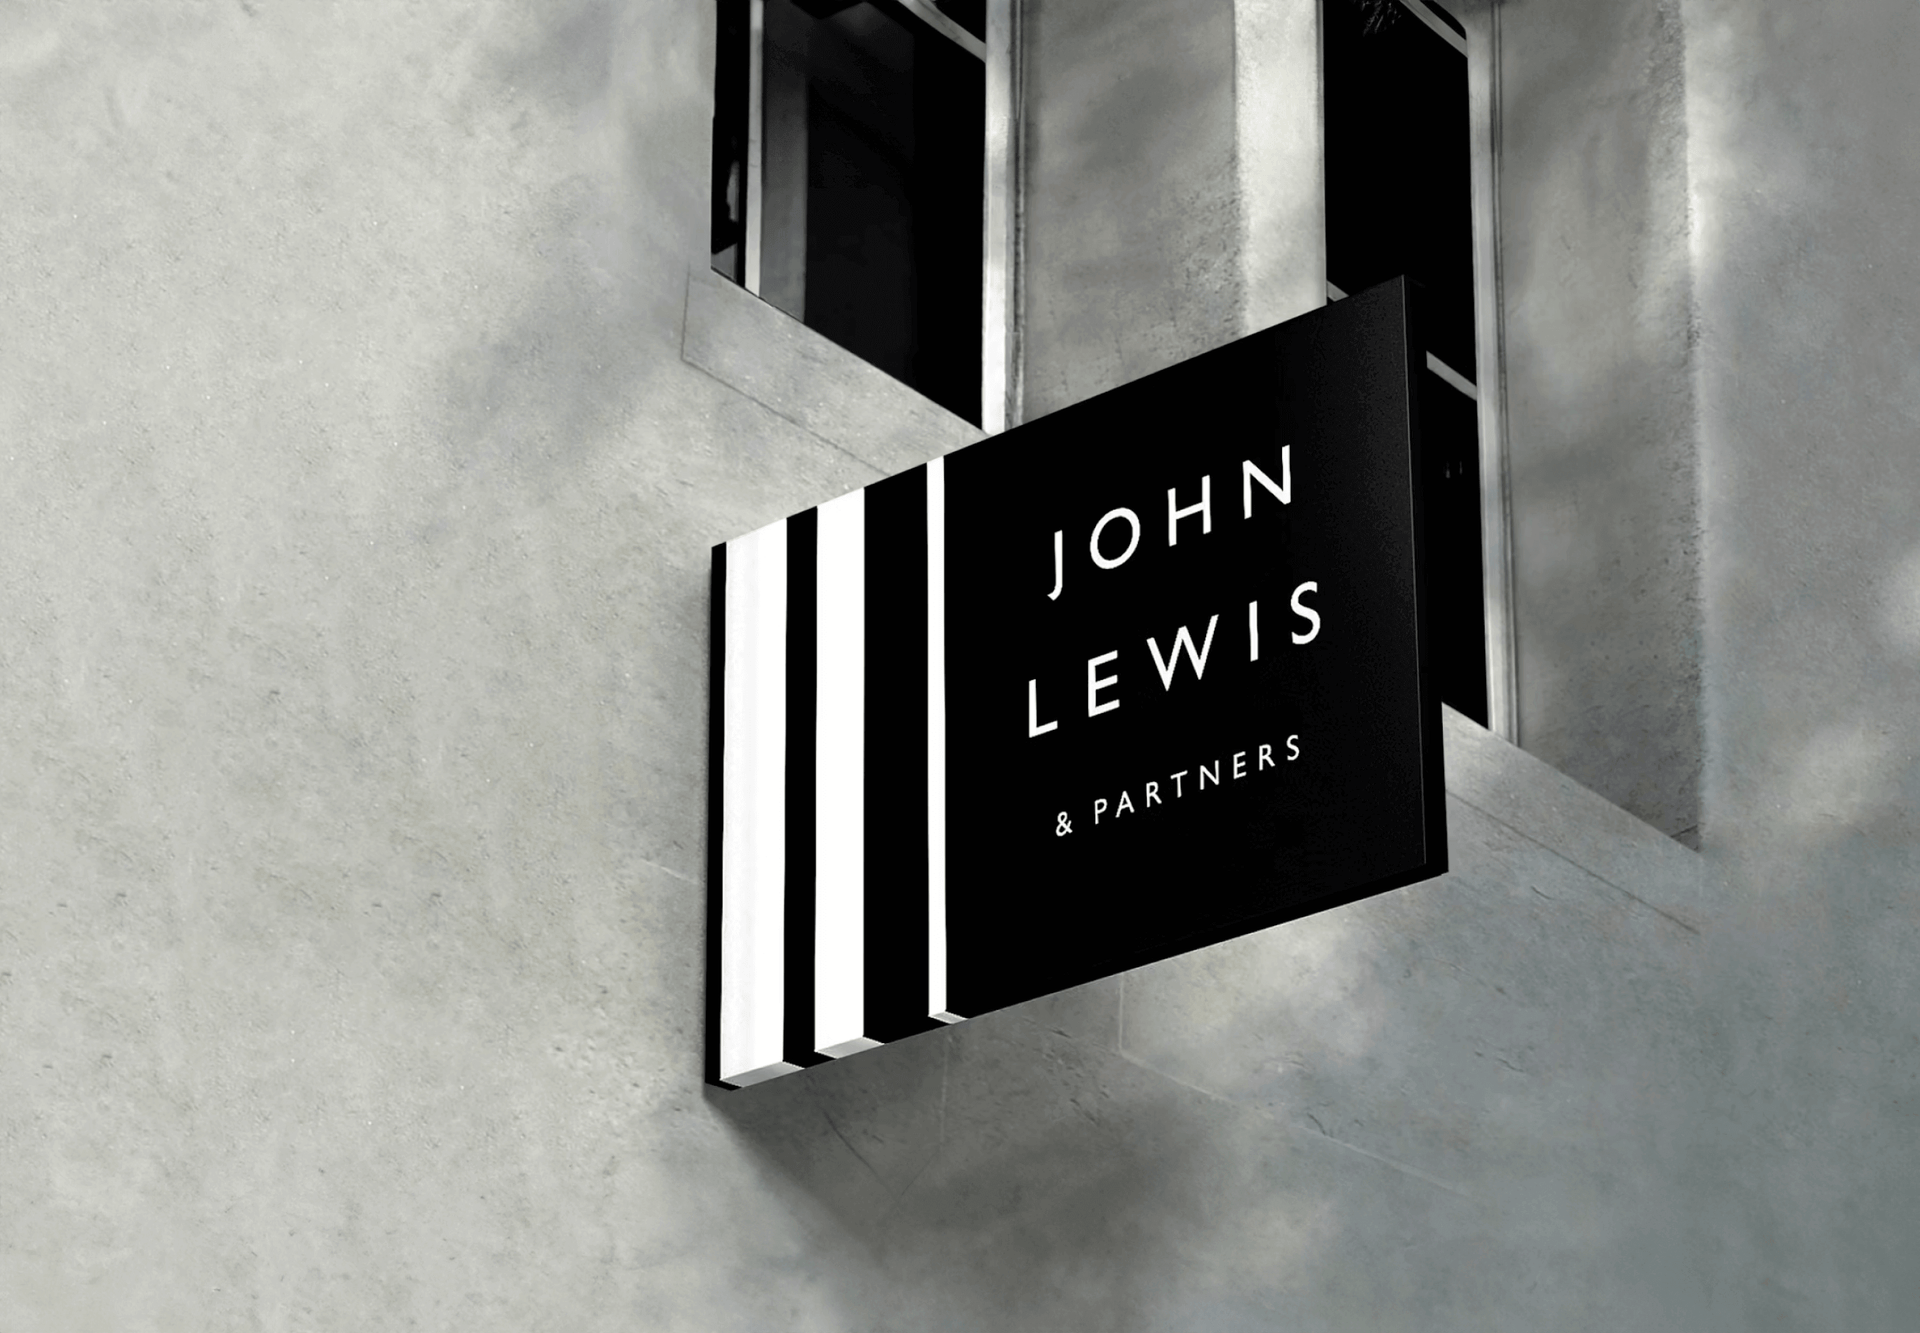 John lewis shop sign